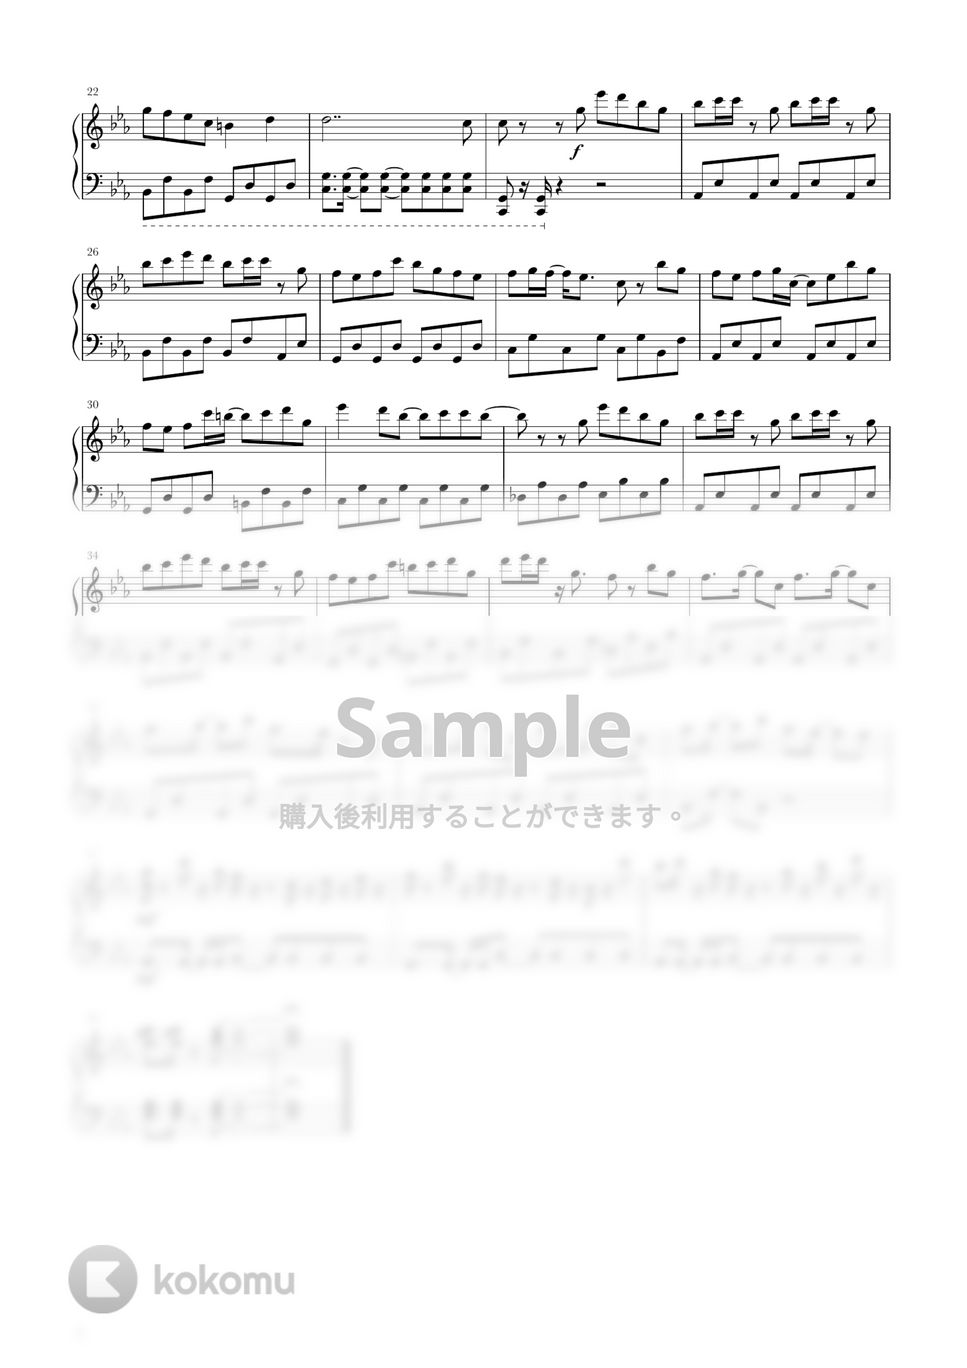 Ayase - ハルジオン (ピアノソロ初級, ワンコーラスのみ) by Ray